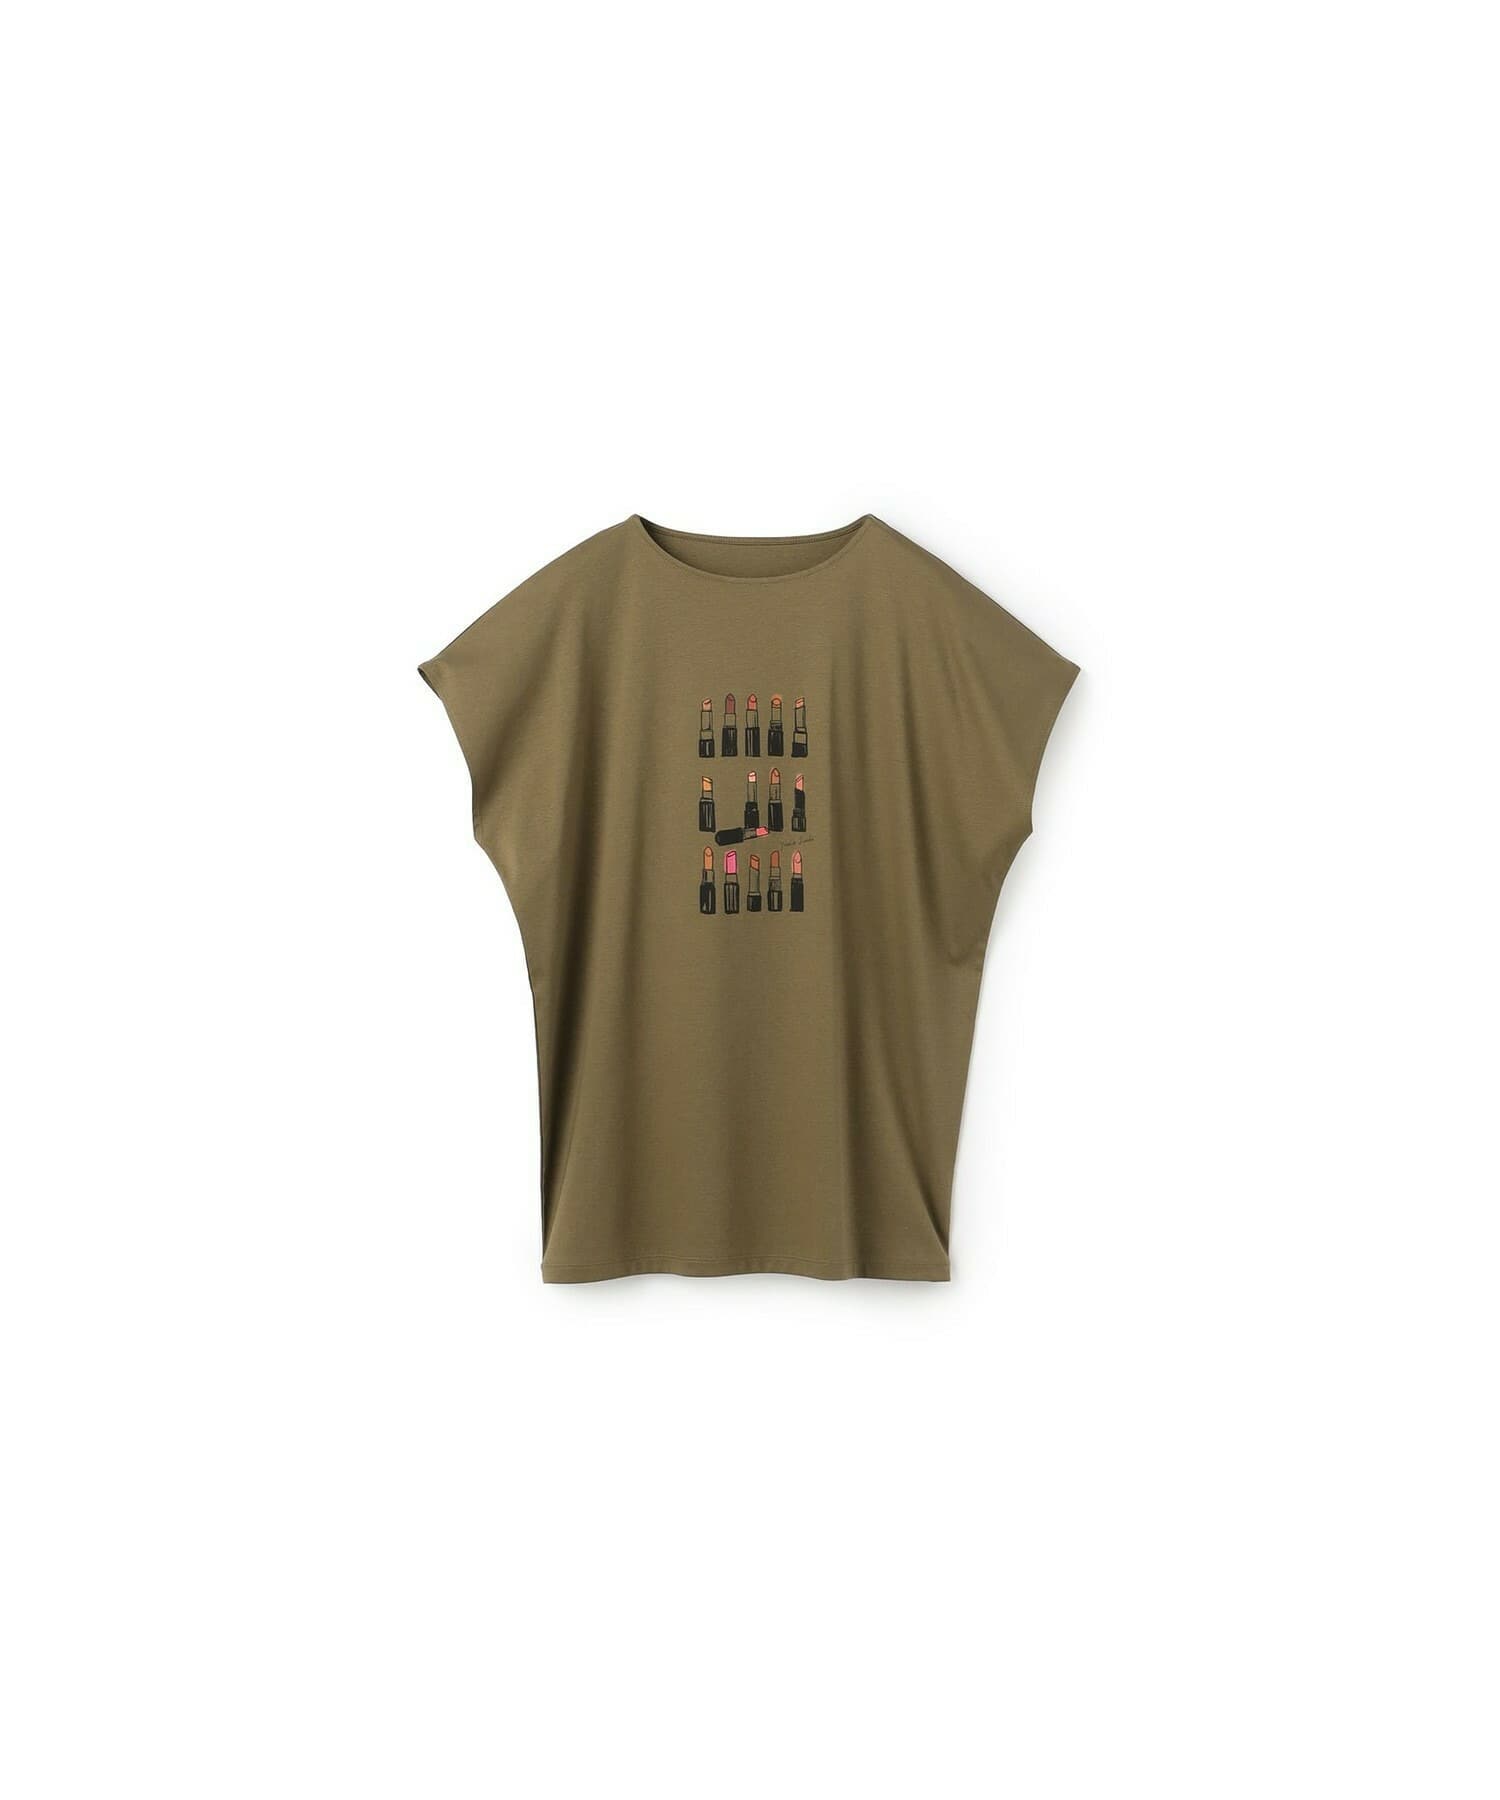 【yoshie inaba】コットンライトスムースリップスティック柄Tシャツ 詳細画像 ブラウン 1